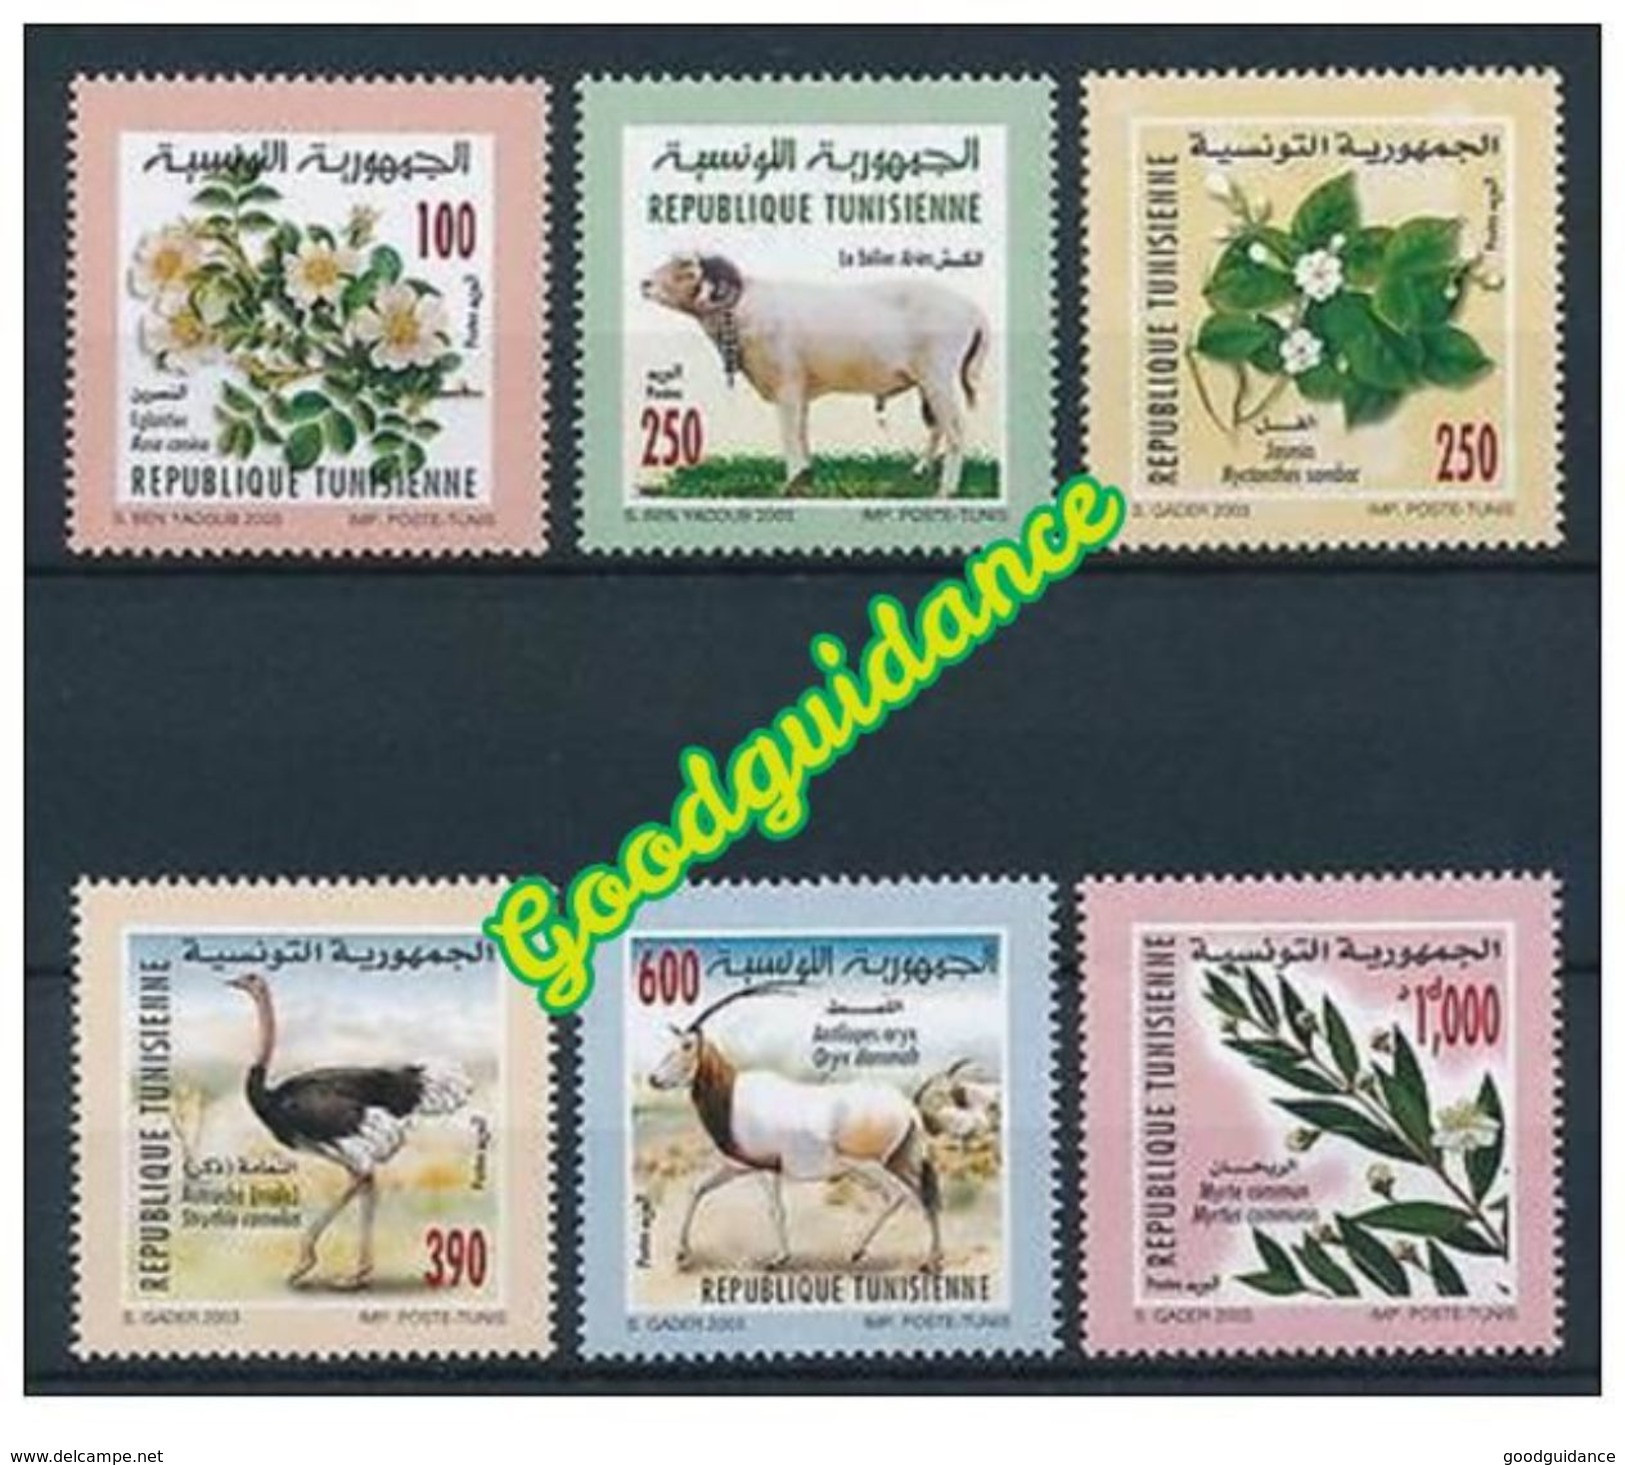 2003- Tunisia- Fauna And Flora: Wild Dog Rose, Jasmine, Ram, Ostrich, Antelope Oryx, Myrtle- Complete Set 3v.MNH** - Tunisie (1956-...)